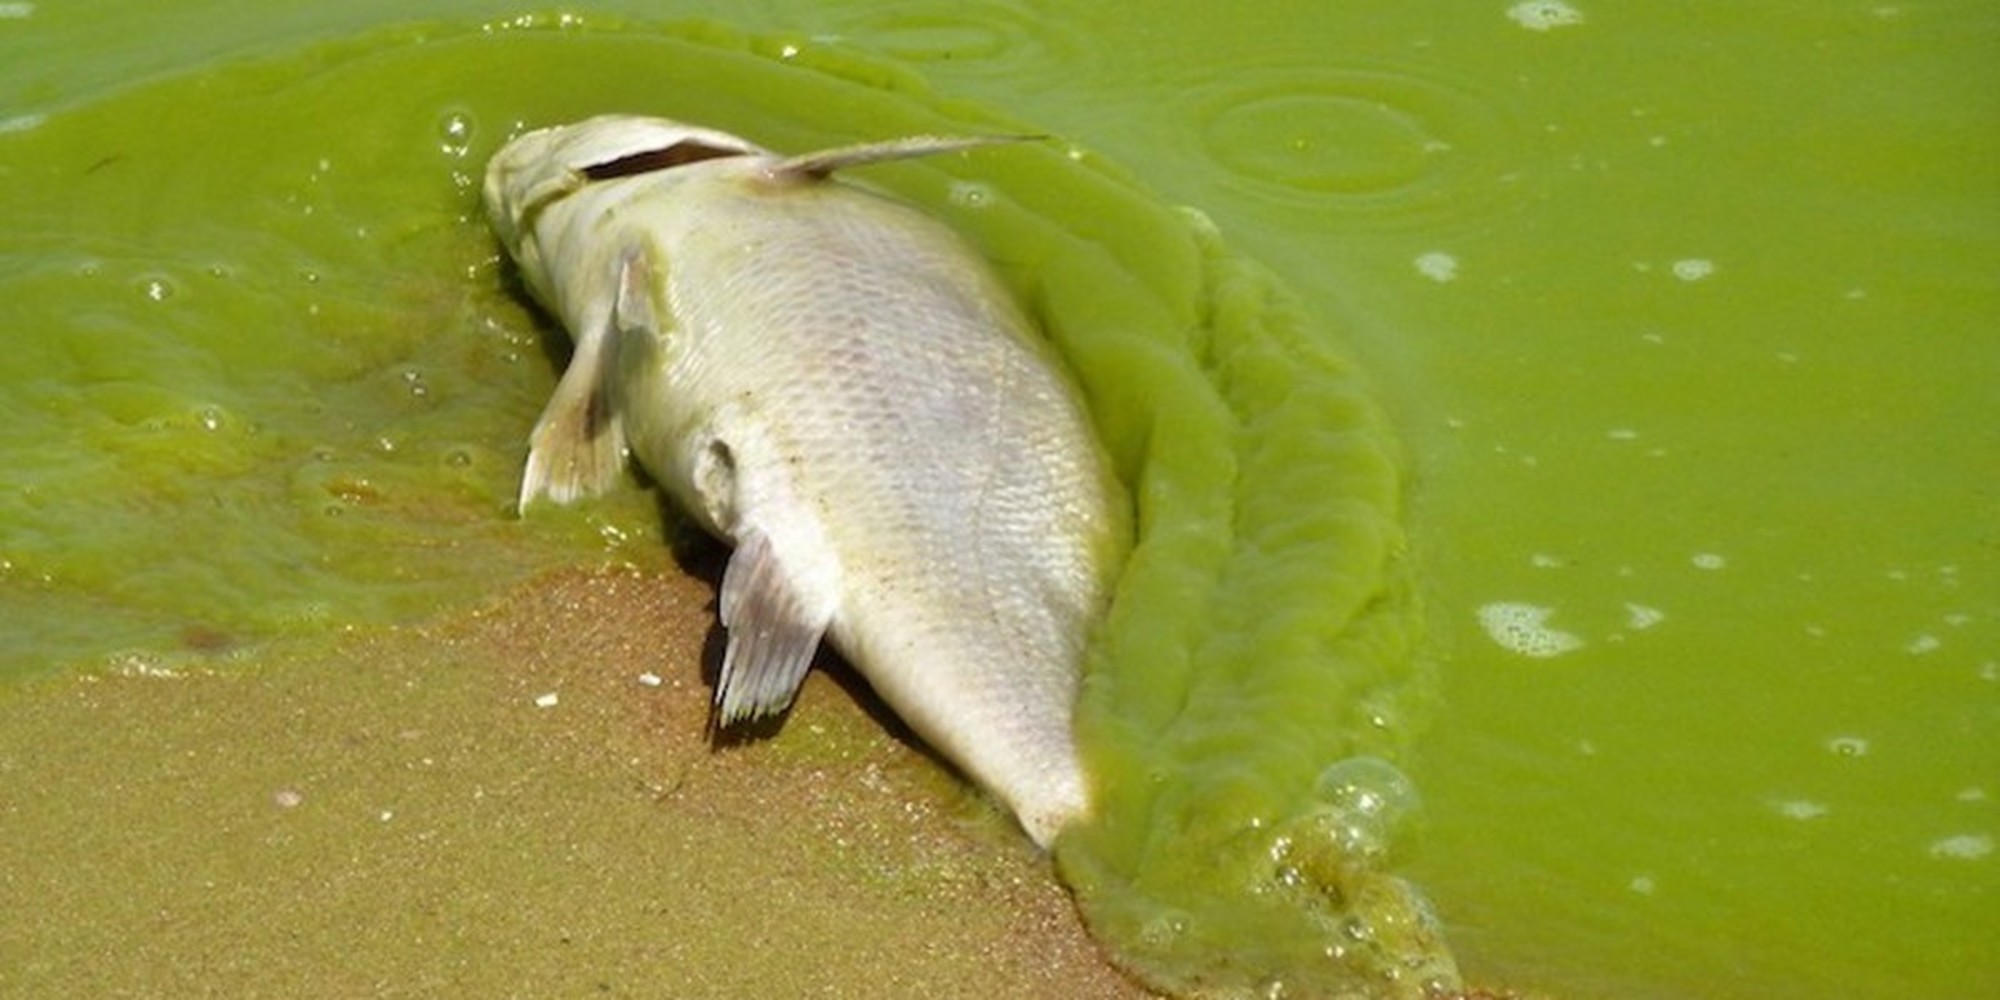 Glyphosate Sprayed on GMO Crops Linked to Lake Erie’s Toxic Algae Bloom